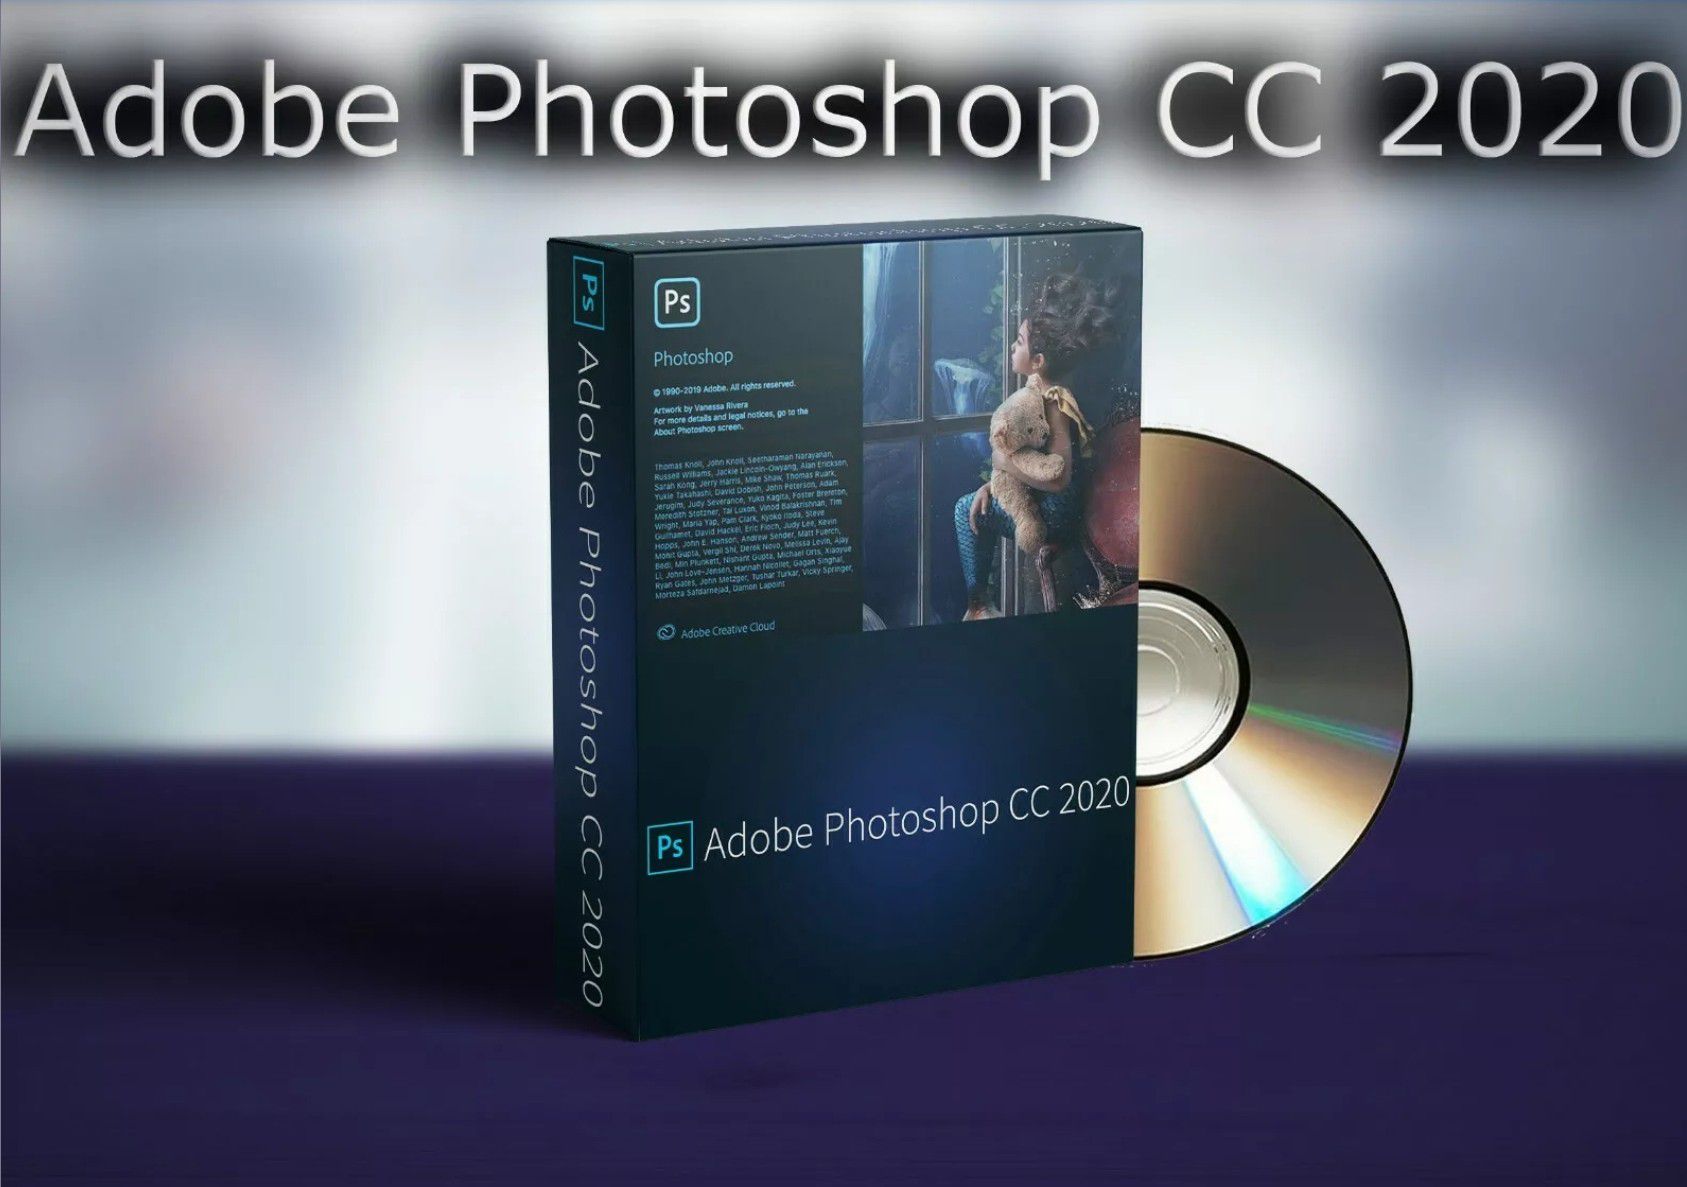 Adobe Photoshop CC 2020 [Windows]